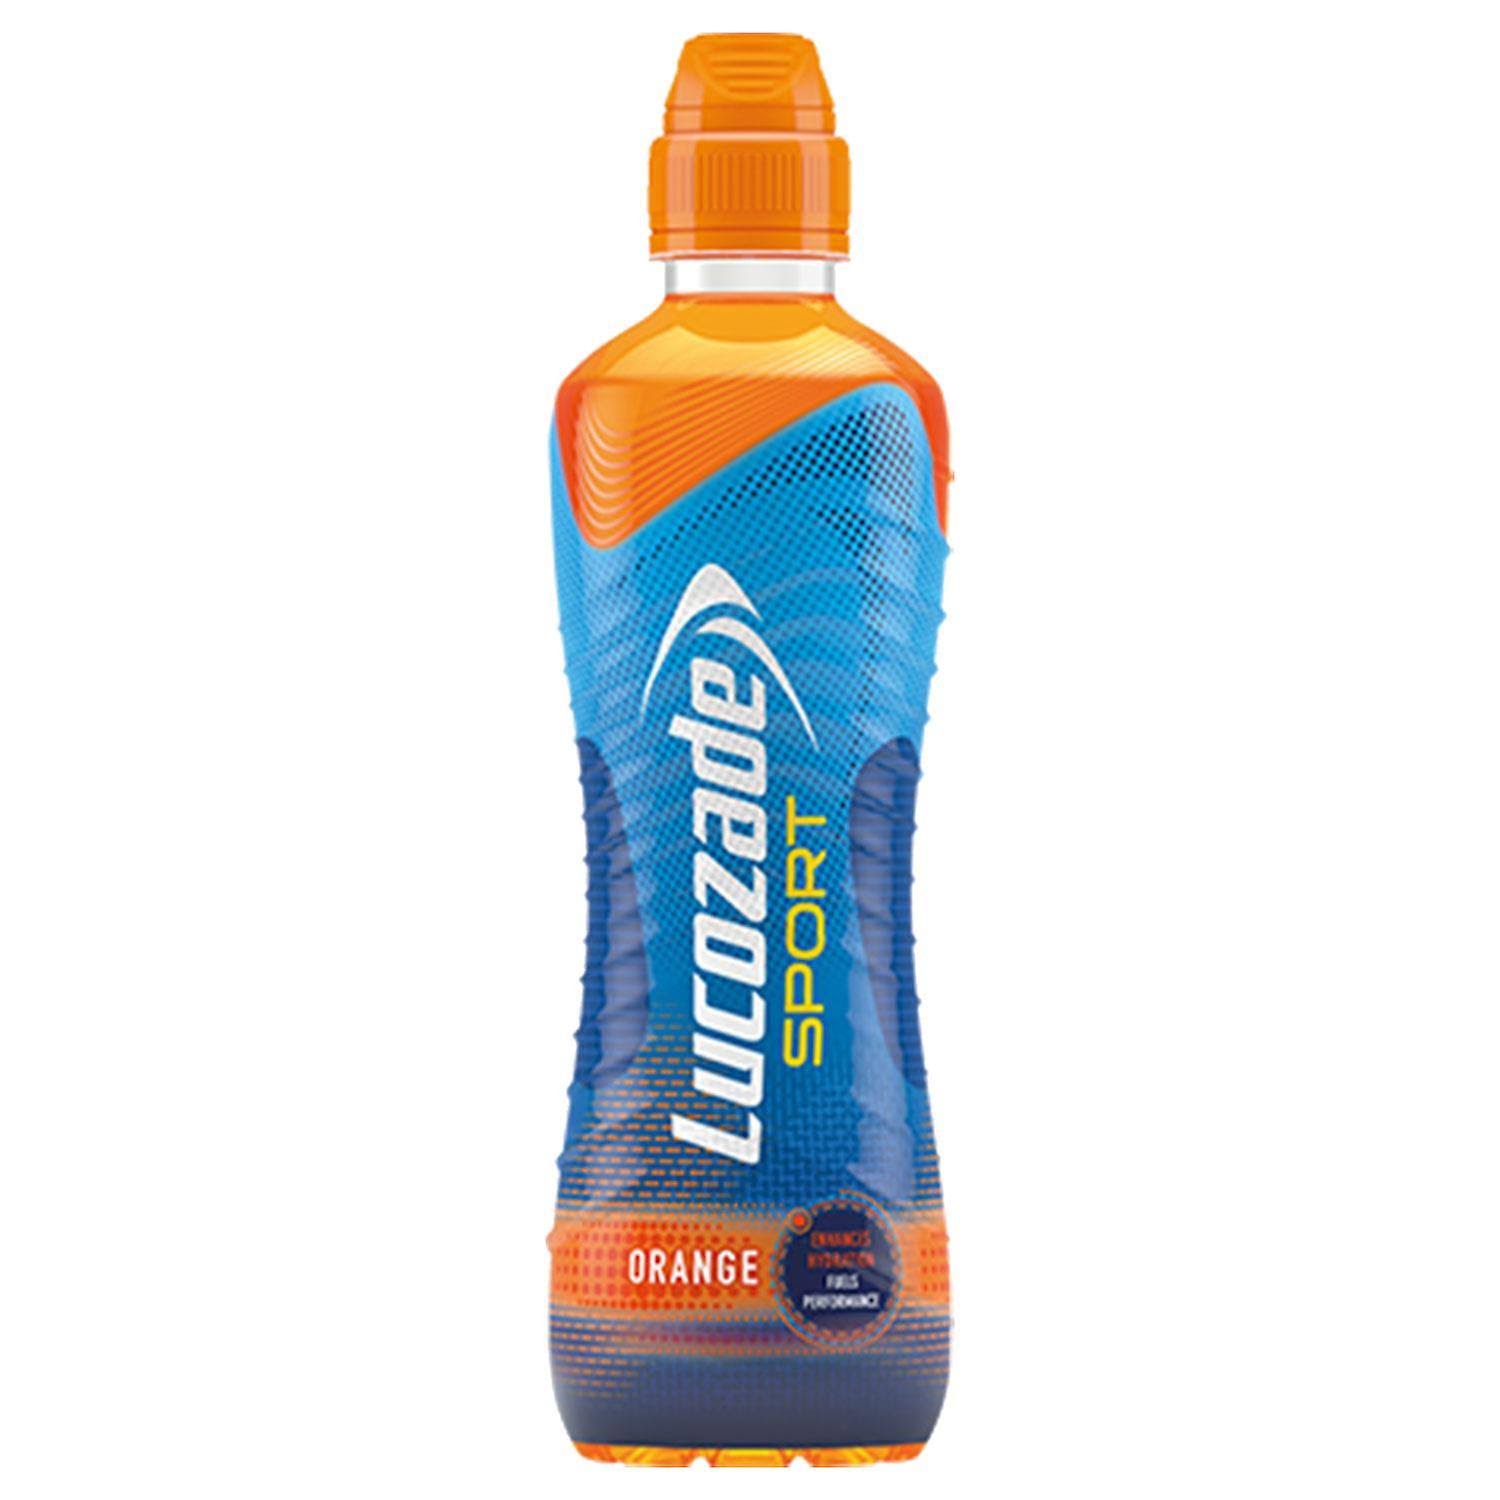 Lucozade Sport Energy Drink - Orange, 500ml